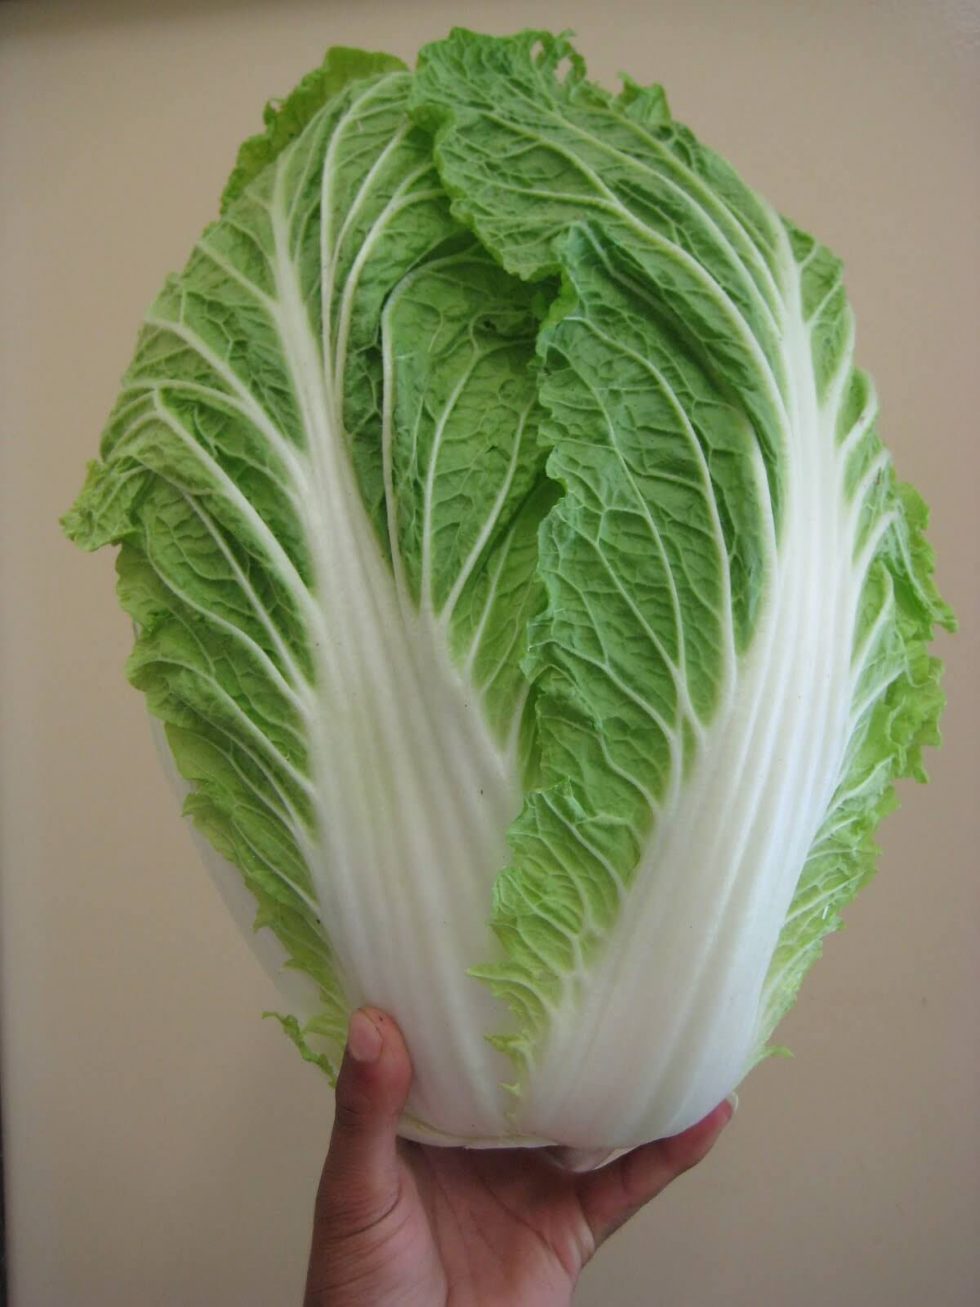 Chinese cabbage / wombok